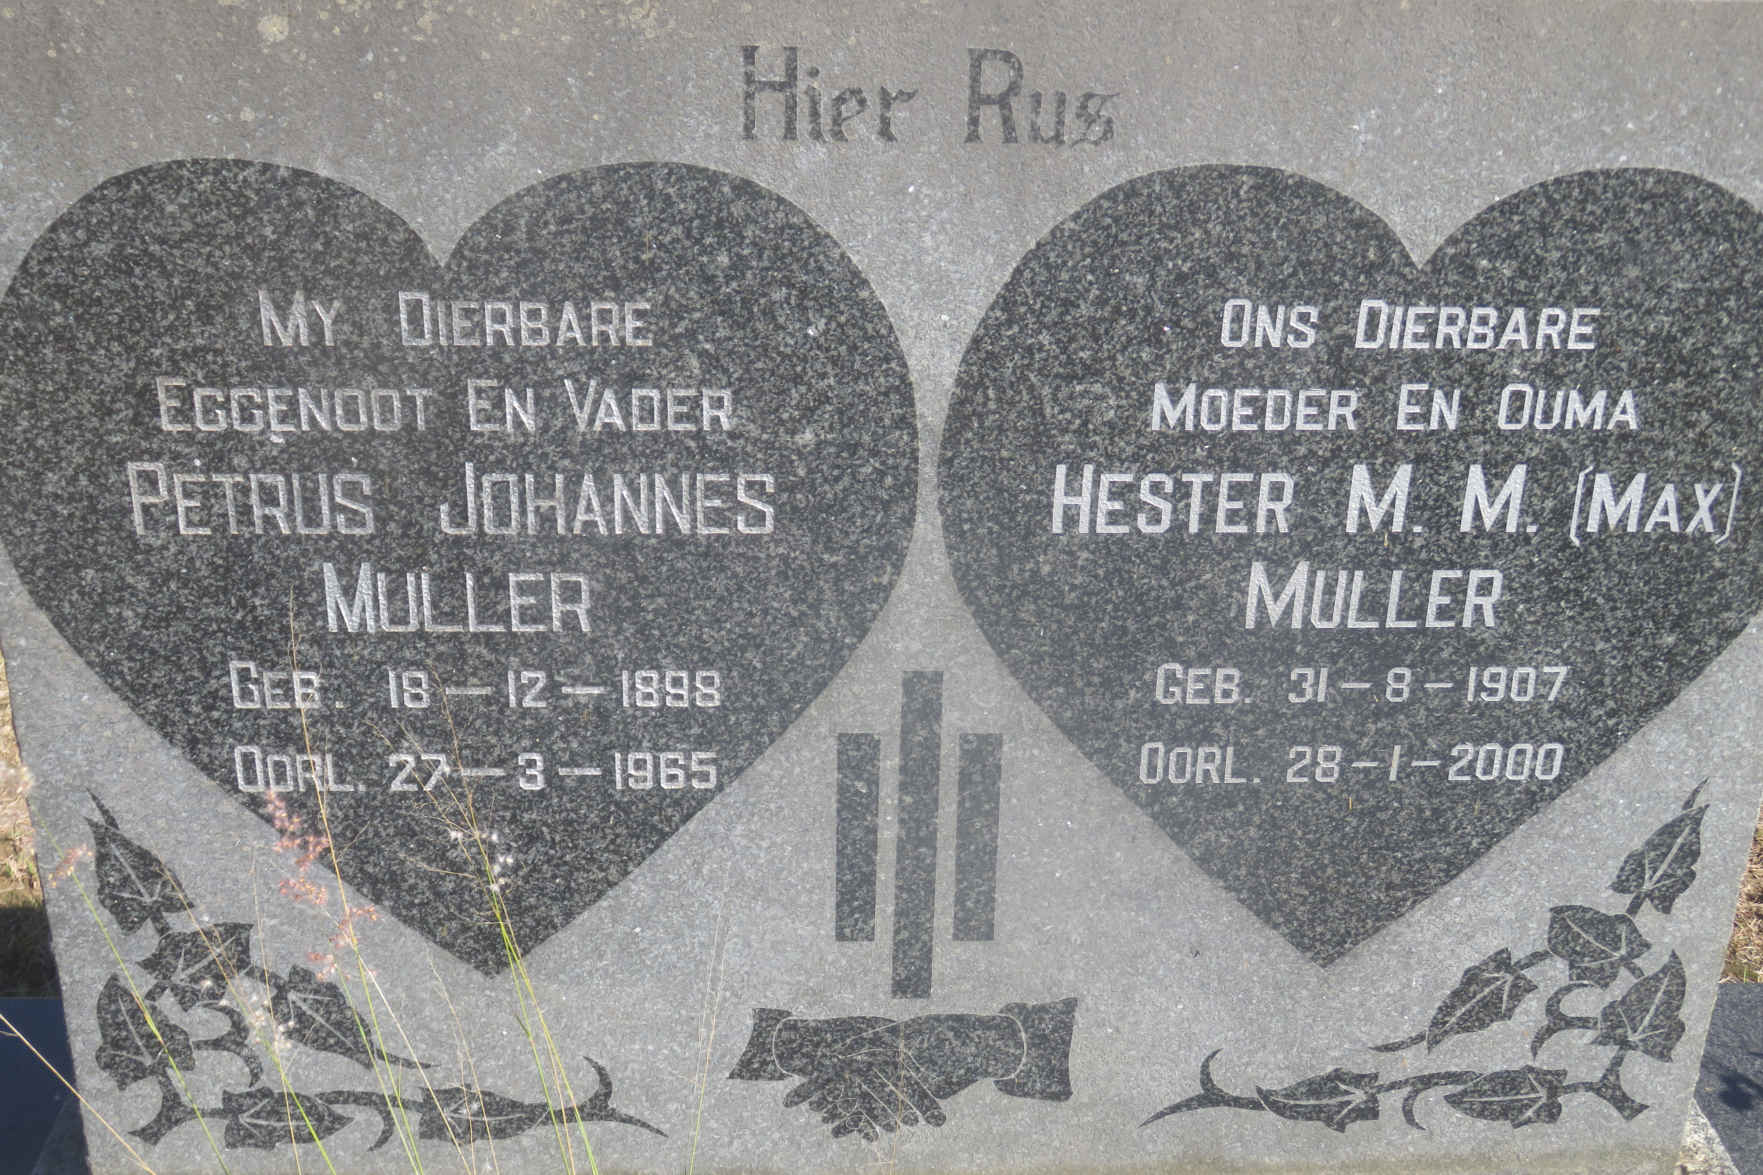 MULLER Petrus Johannes 1898-1965 & Hester M.M. 1907-2000